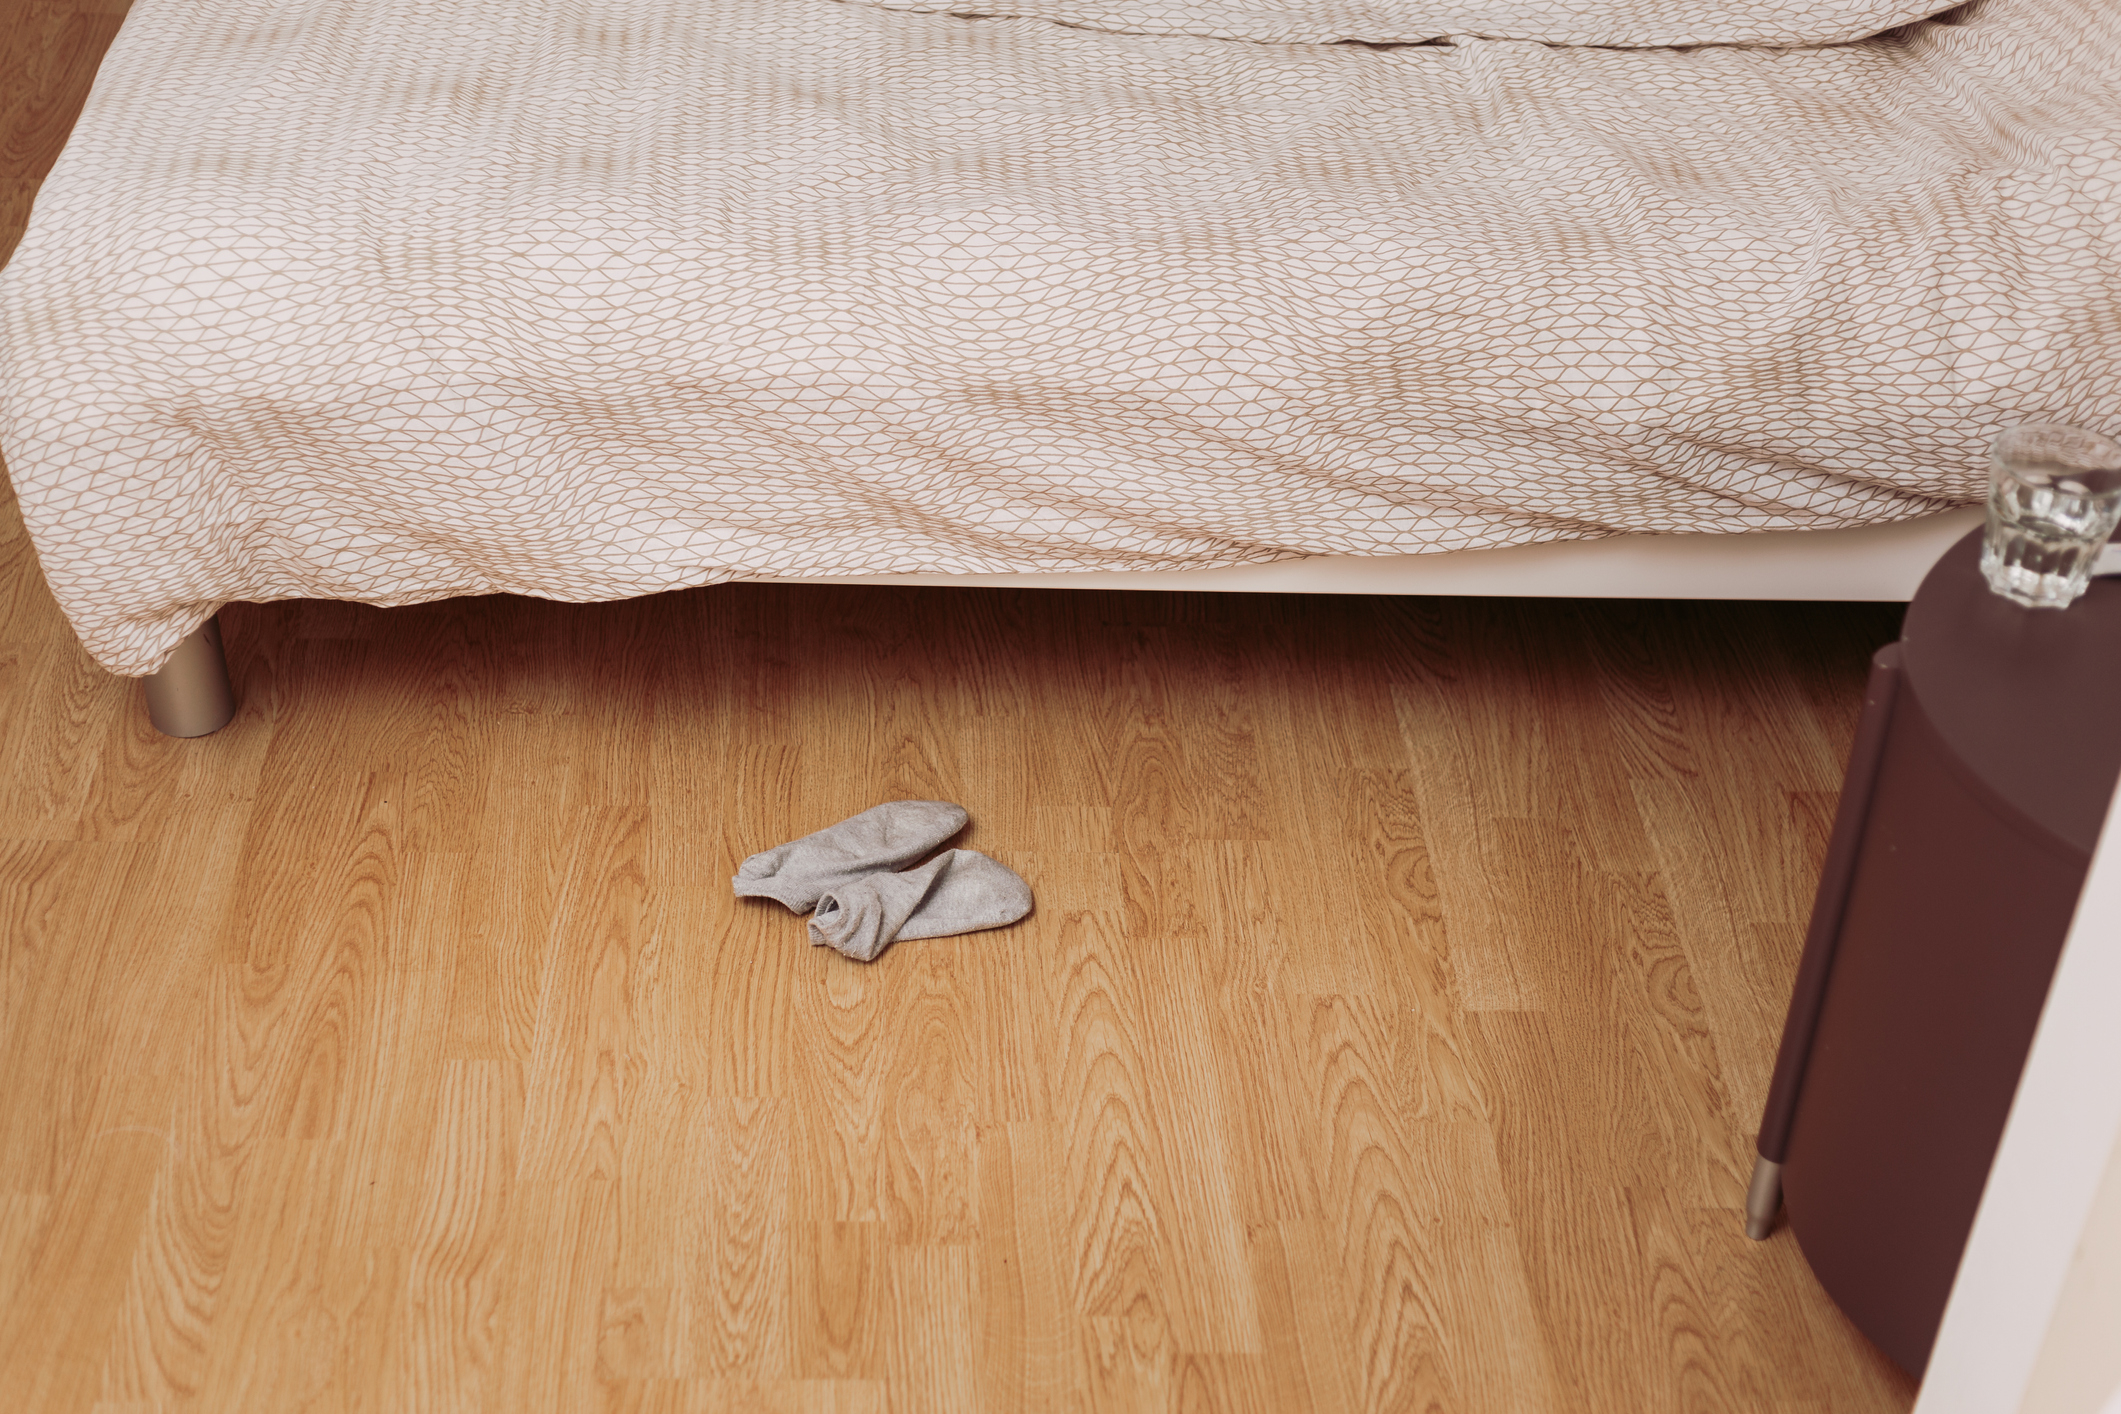 Dirty socks on a bedroom floor